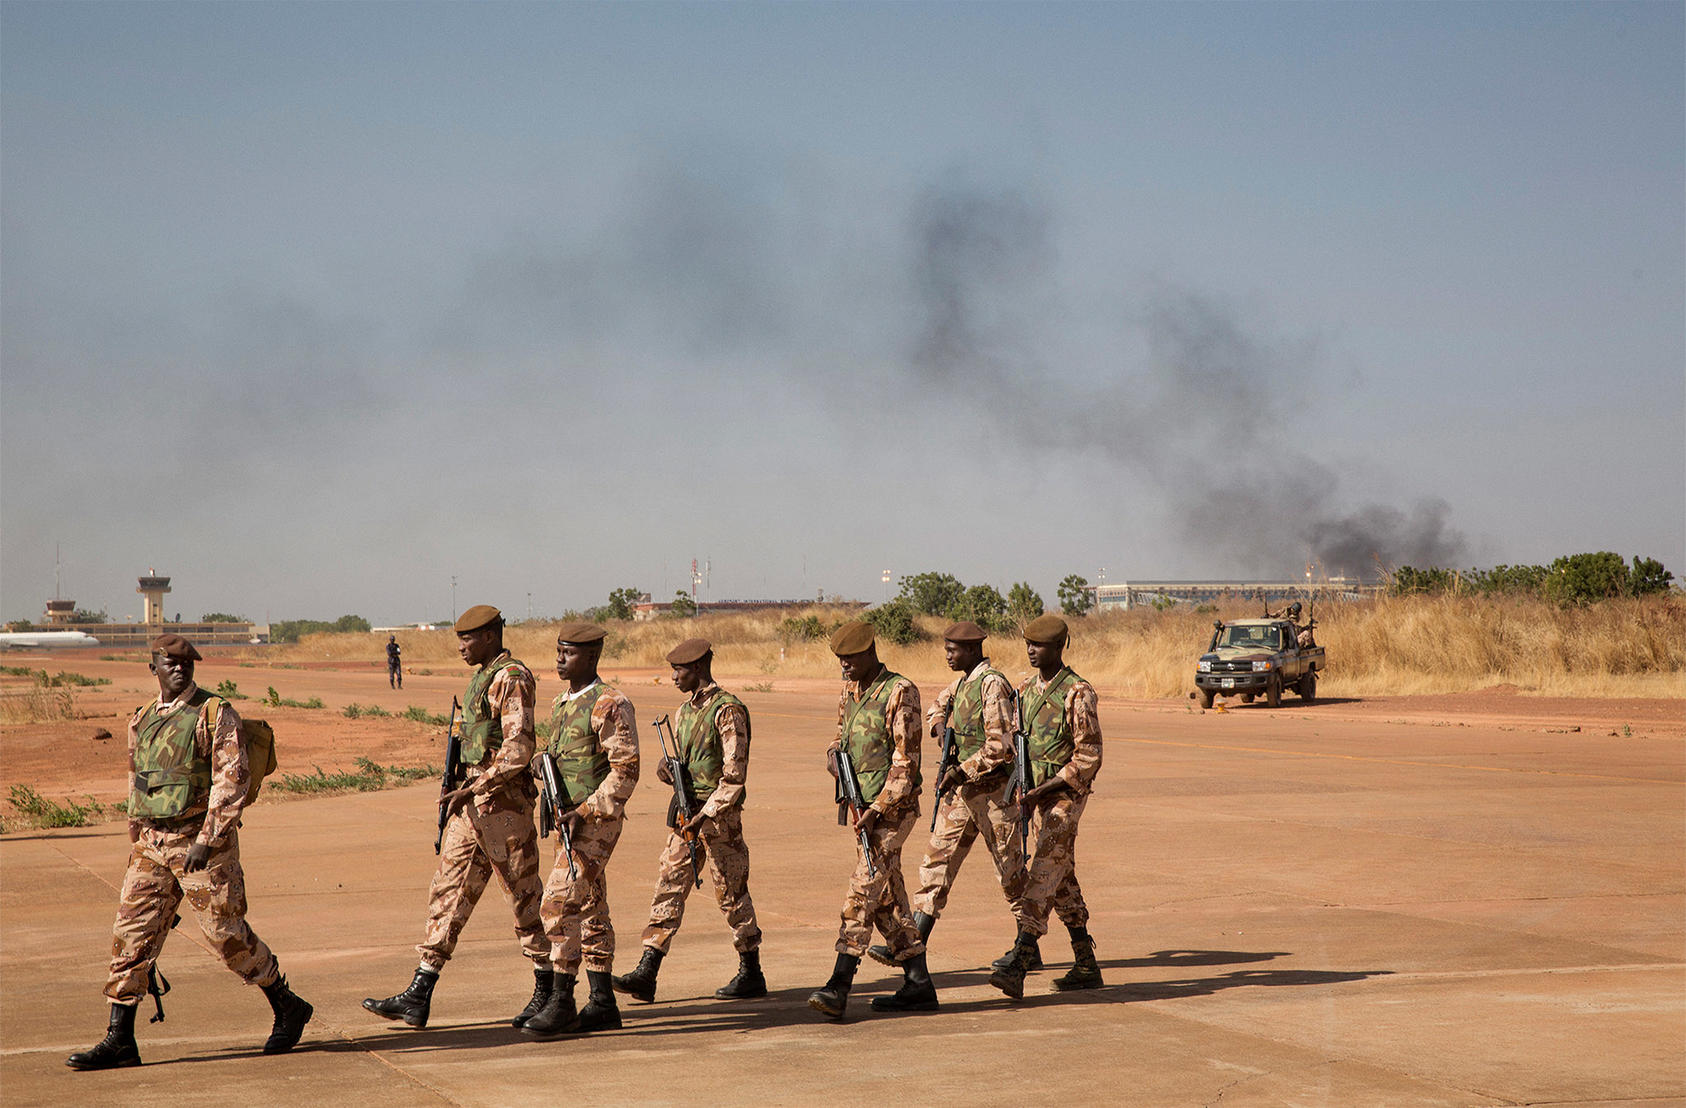 Malian soldiers patrol an airbase in Bamako, Mali, Jan. 16, 2013. (Marco Gualazzini/The New York Times)